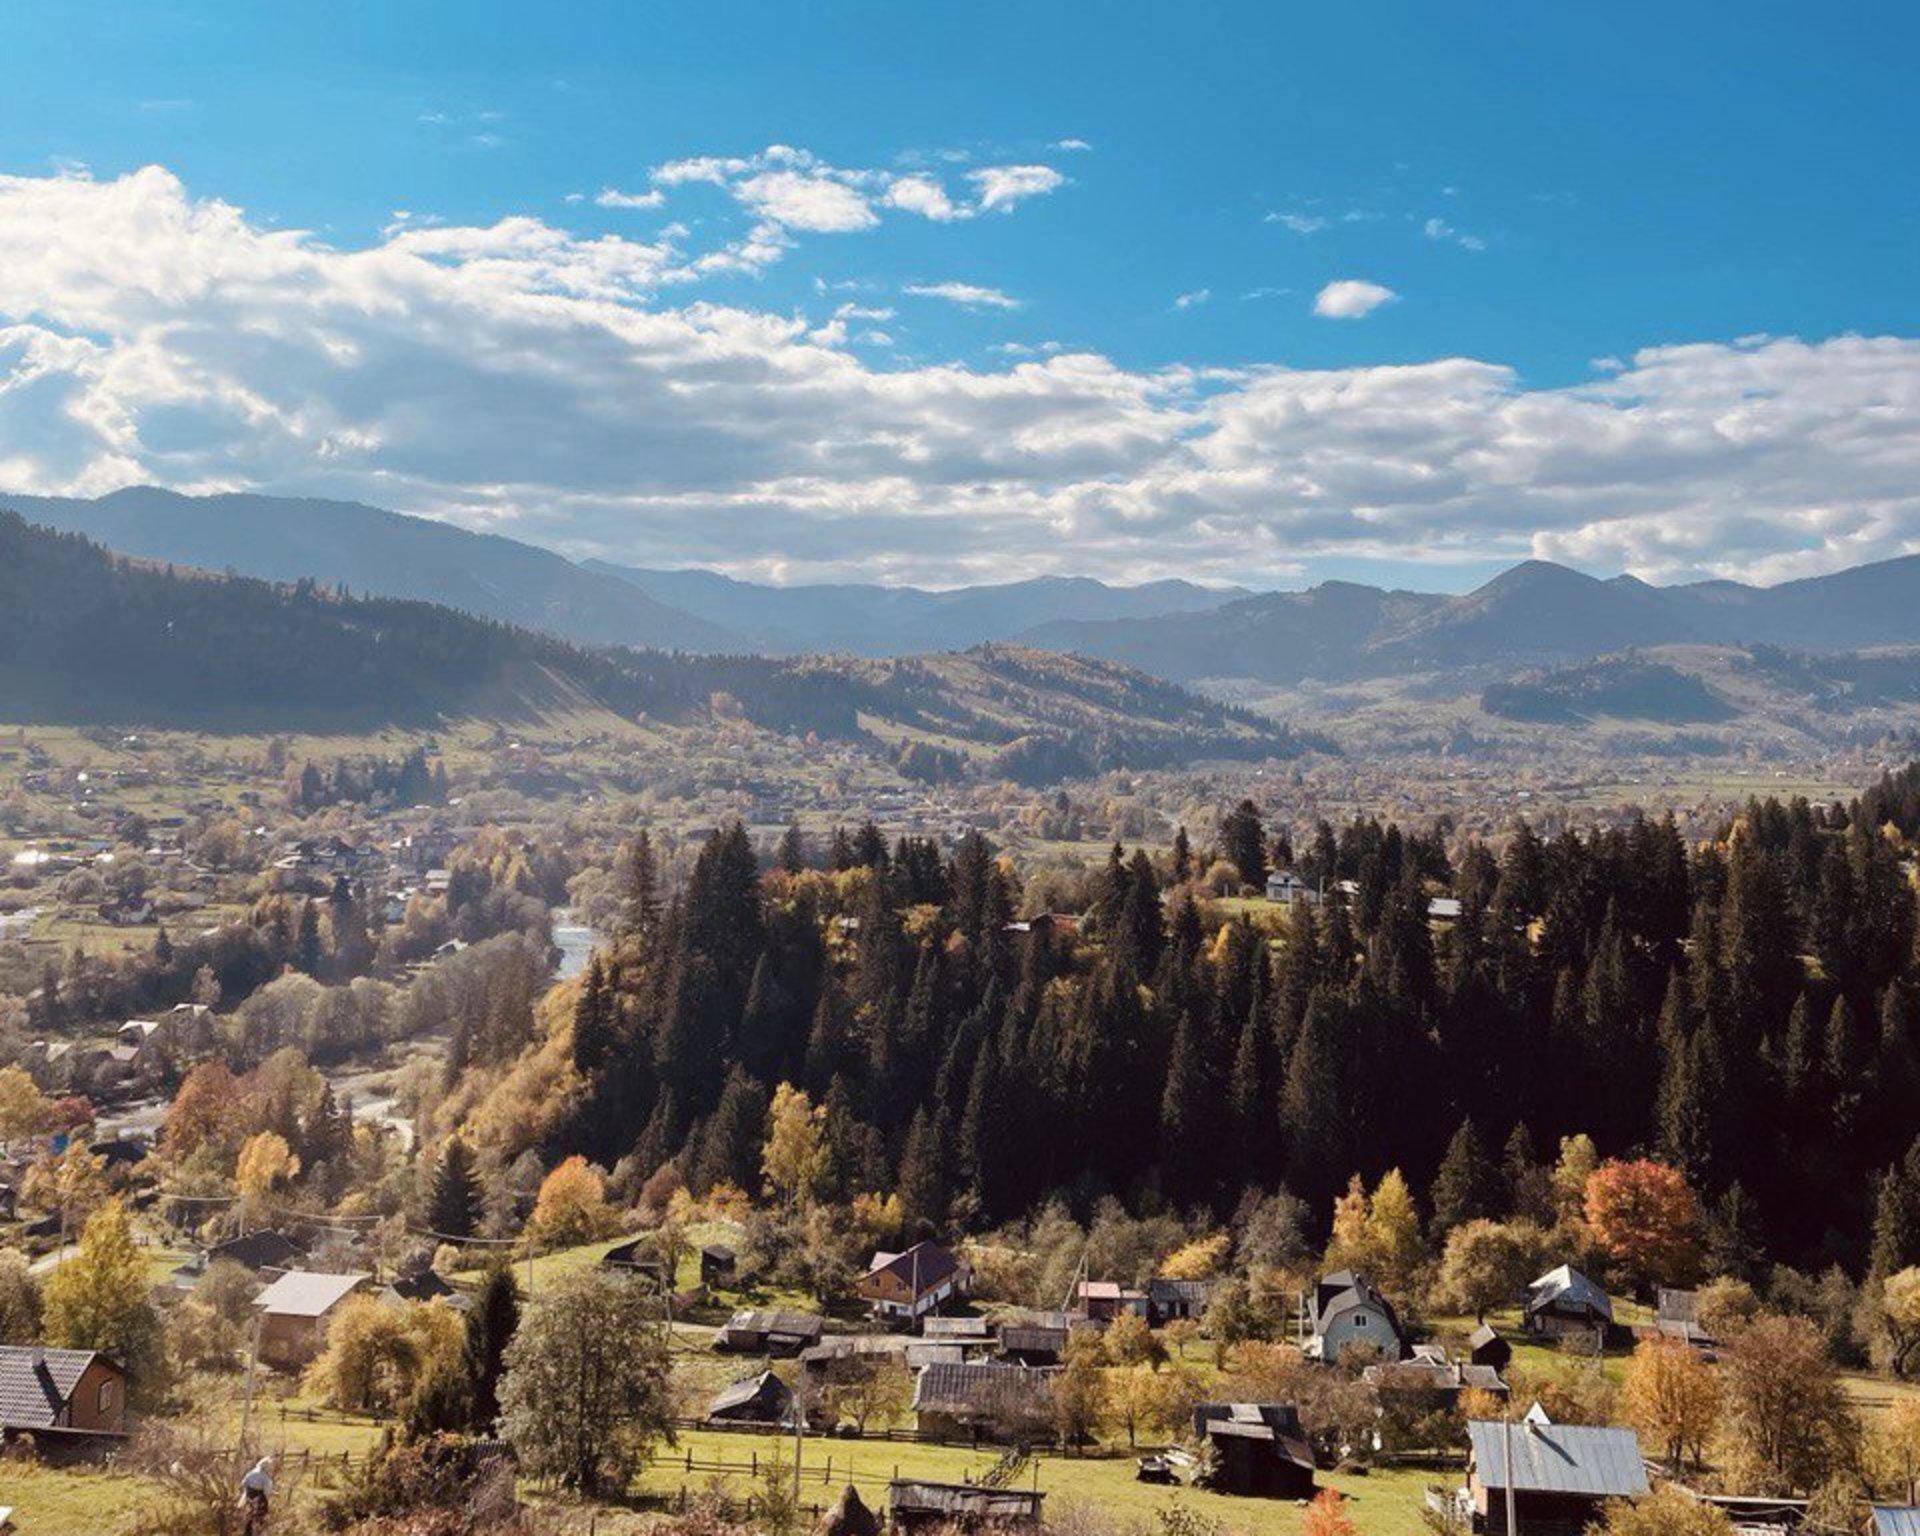 Fall Foliage in the Carpathian Mountains